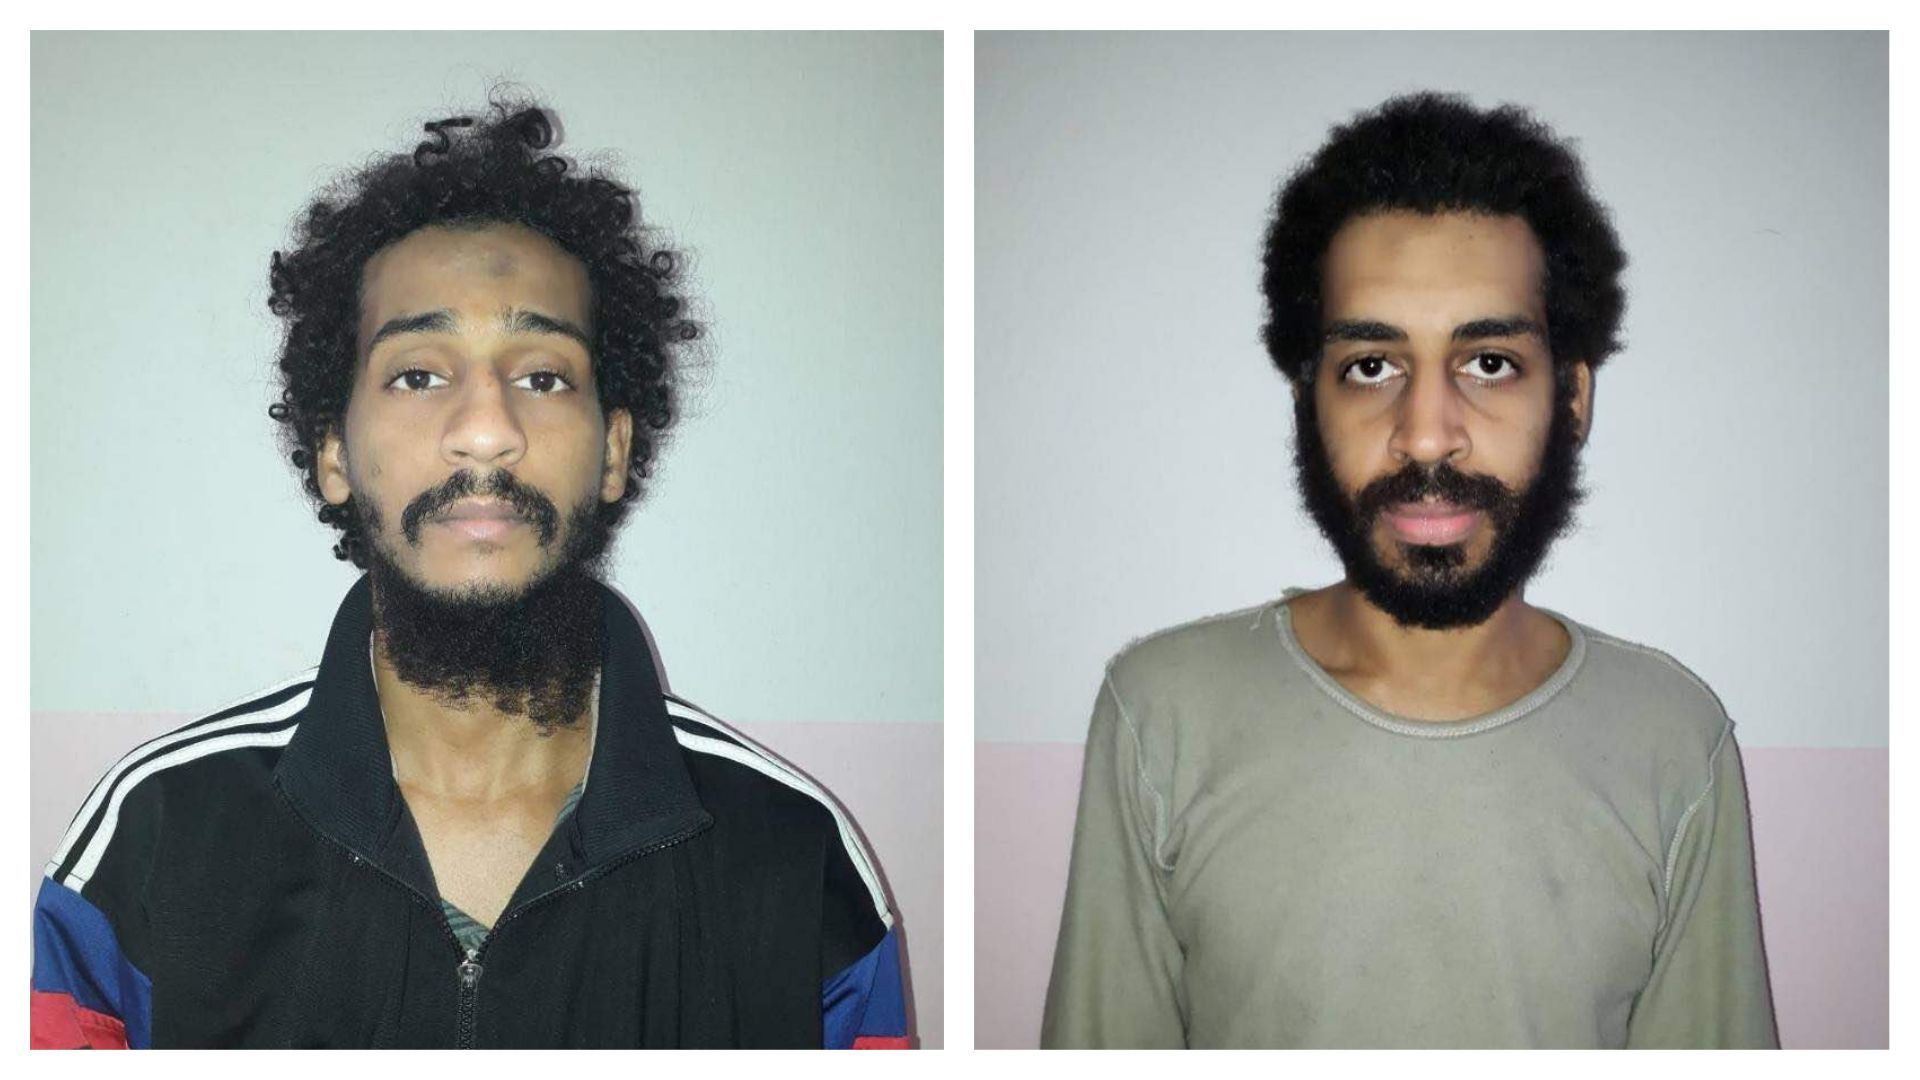 Etats-Unis : deux djihadistes surnommés "Beatles" doivent être transférés mercredi